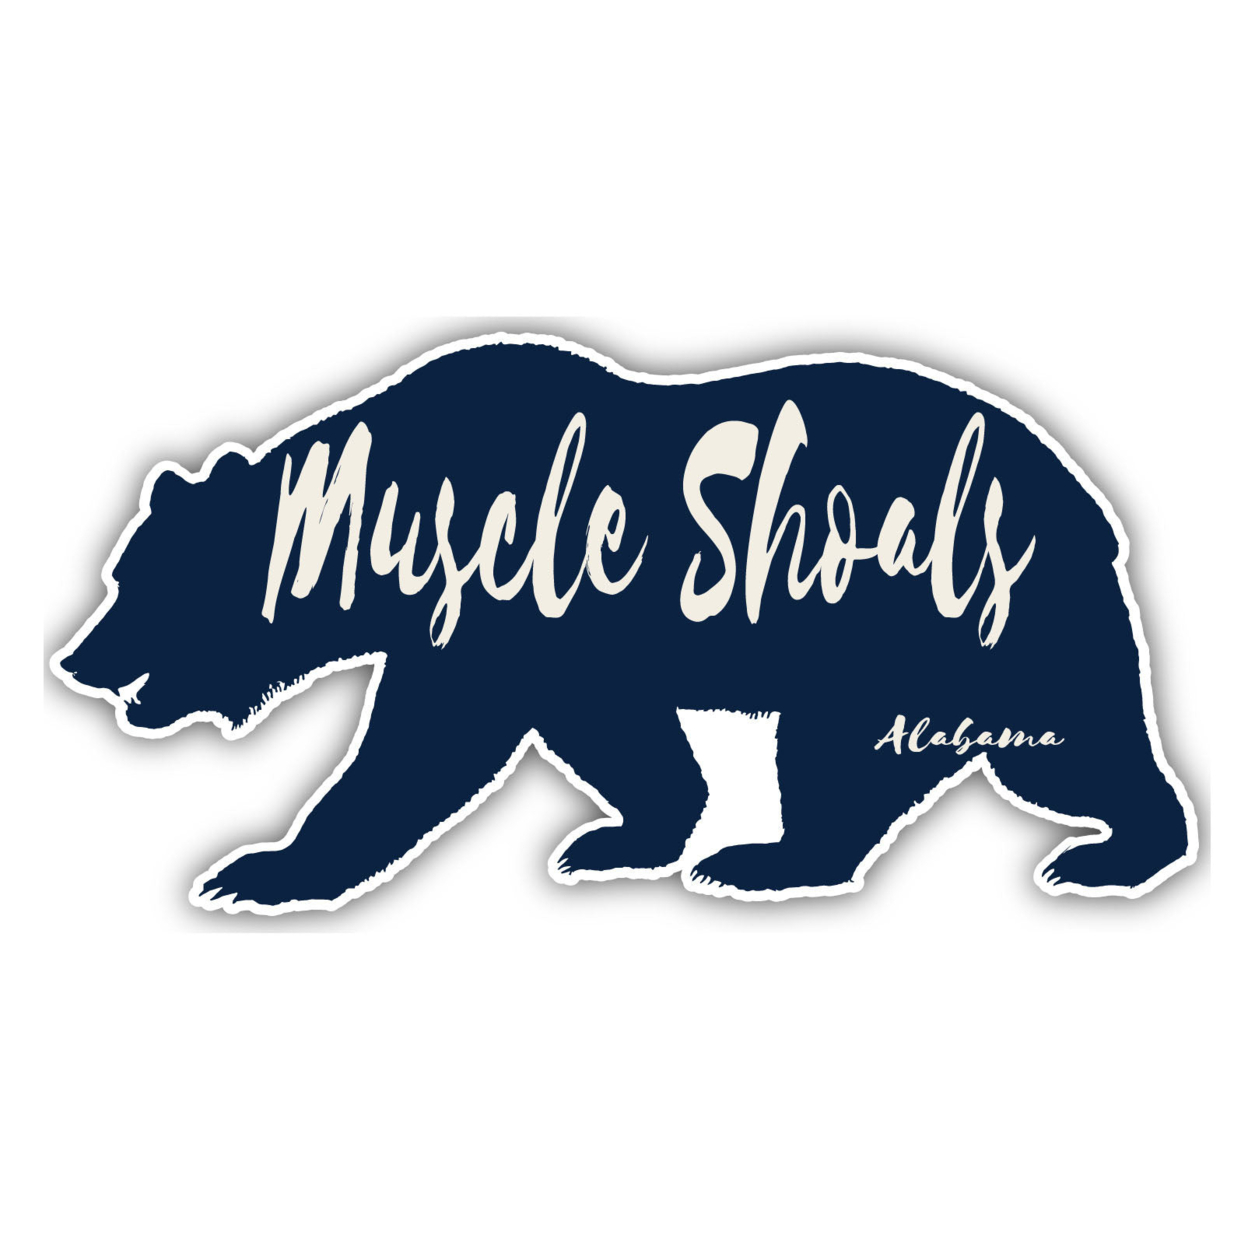 Muscle Shoals Alabama Souvenir Decorative Stickers (Choose Theme And Size) - Single Unit, 2-Inch, Bear